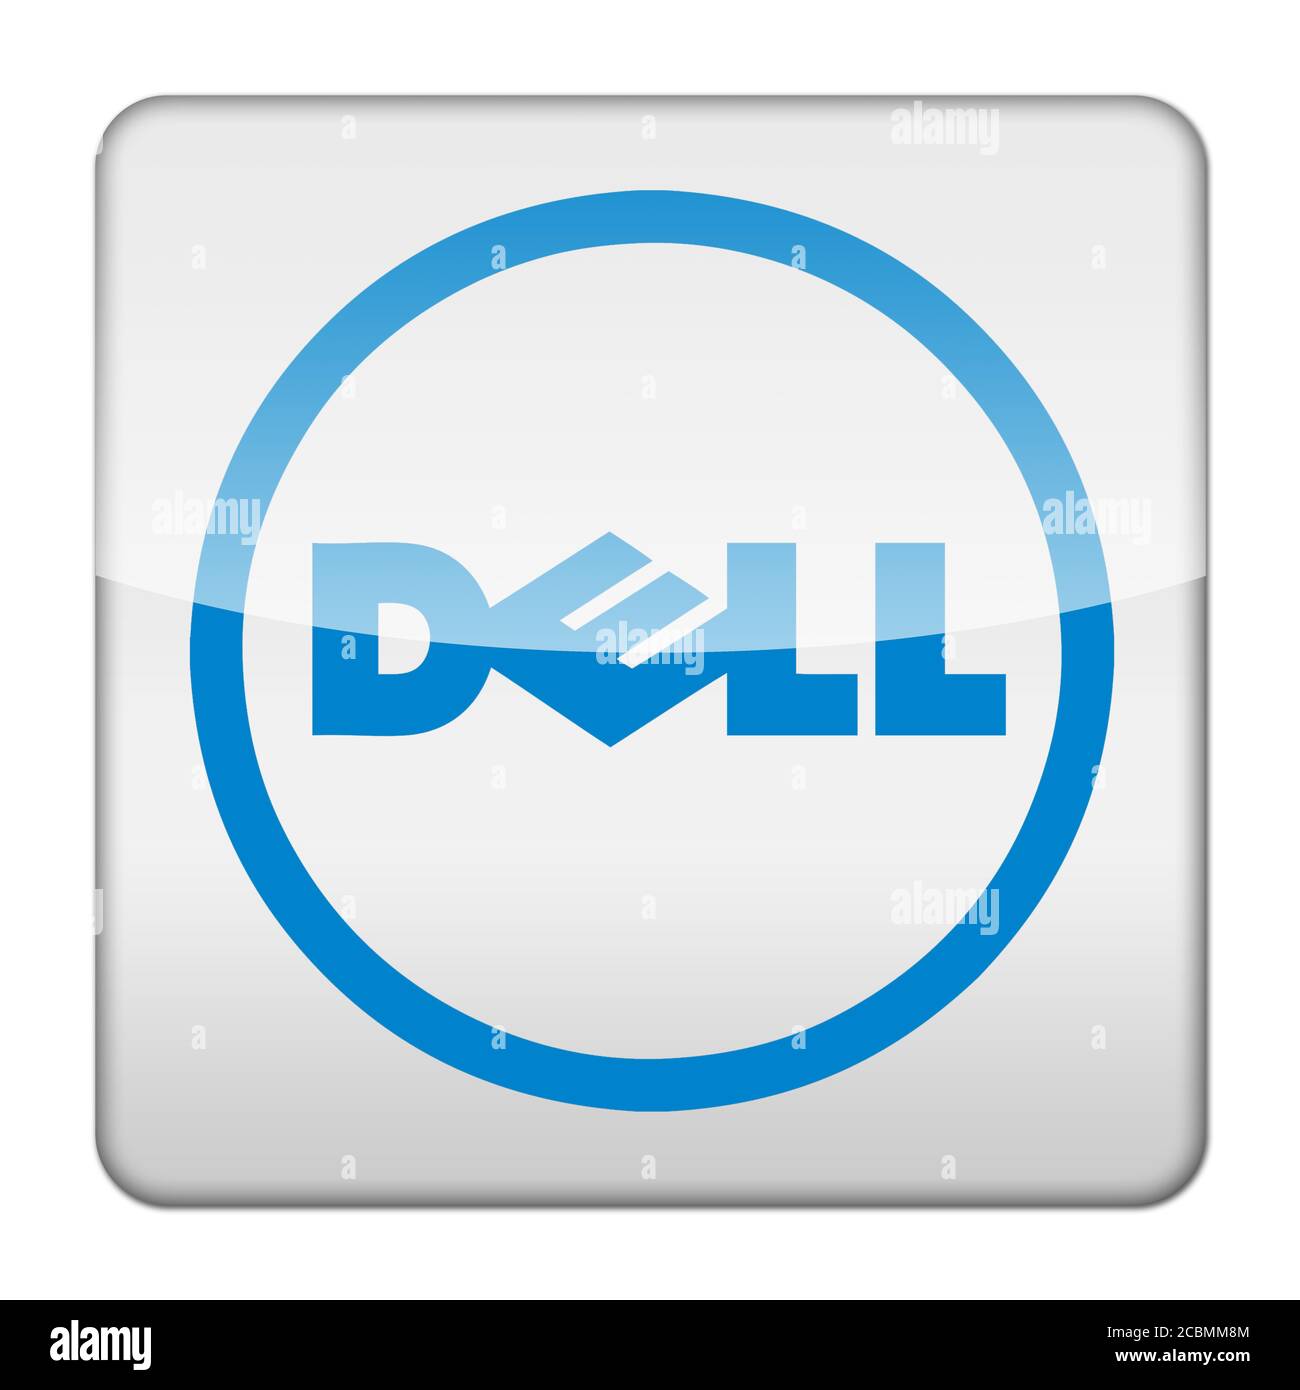 Dell Computers logo icon app flag button Stock Photo